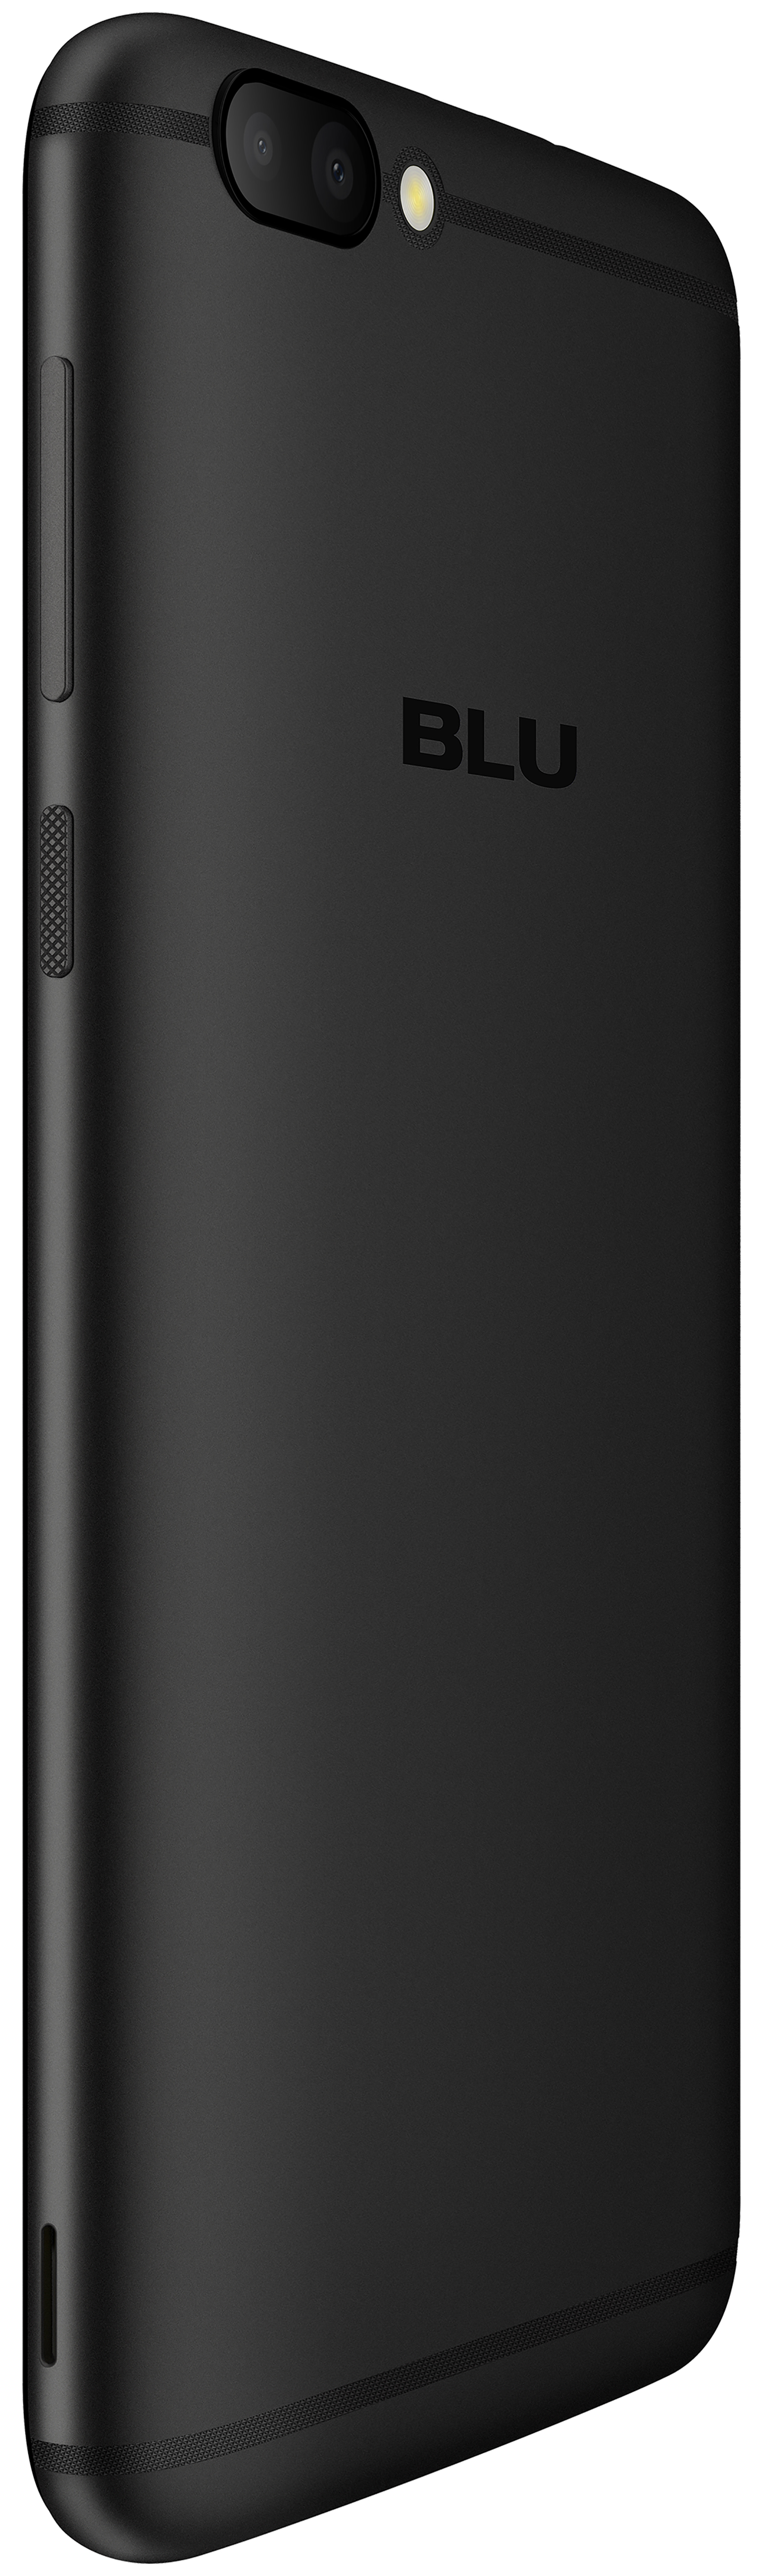 BLU C6 C031P Unlocked GSM Dual-SIM Android Phone w/ Dual 8MP|2MP Camera - Black - image 3 of 4